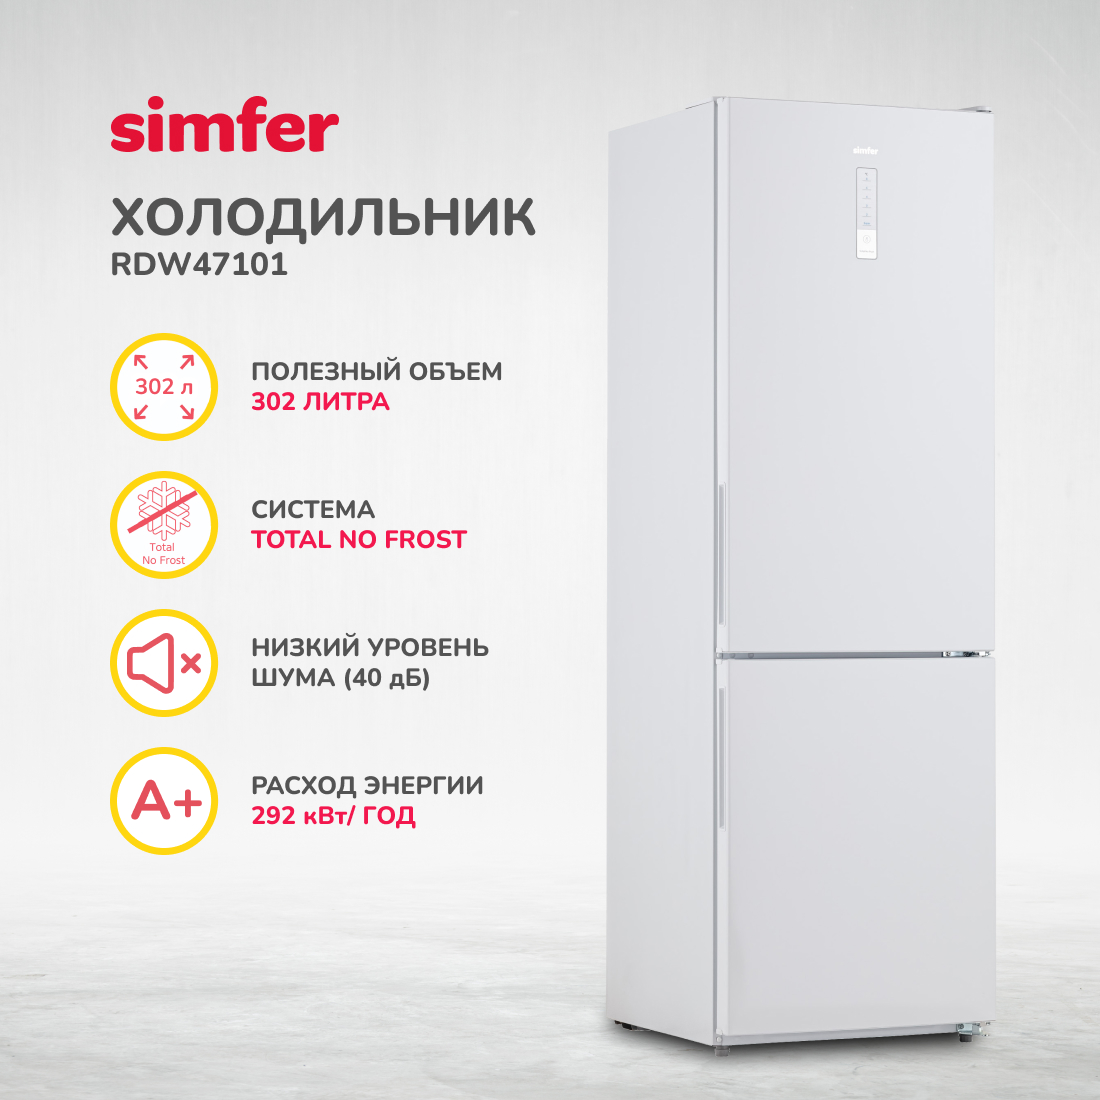 Холодильник Simfer RDW47101, No Frost, двухкамерный, 302 л стул frost pp 8110 серый